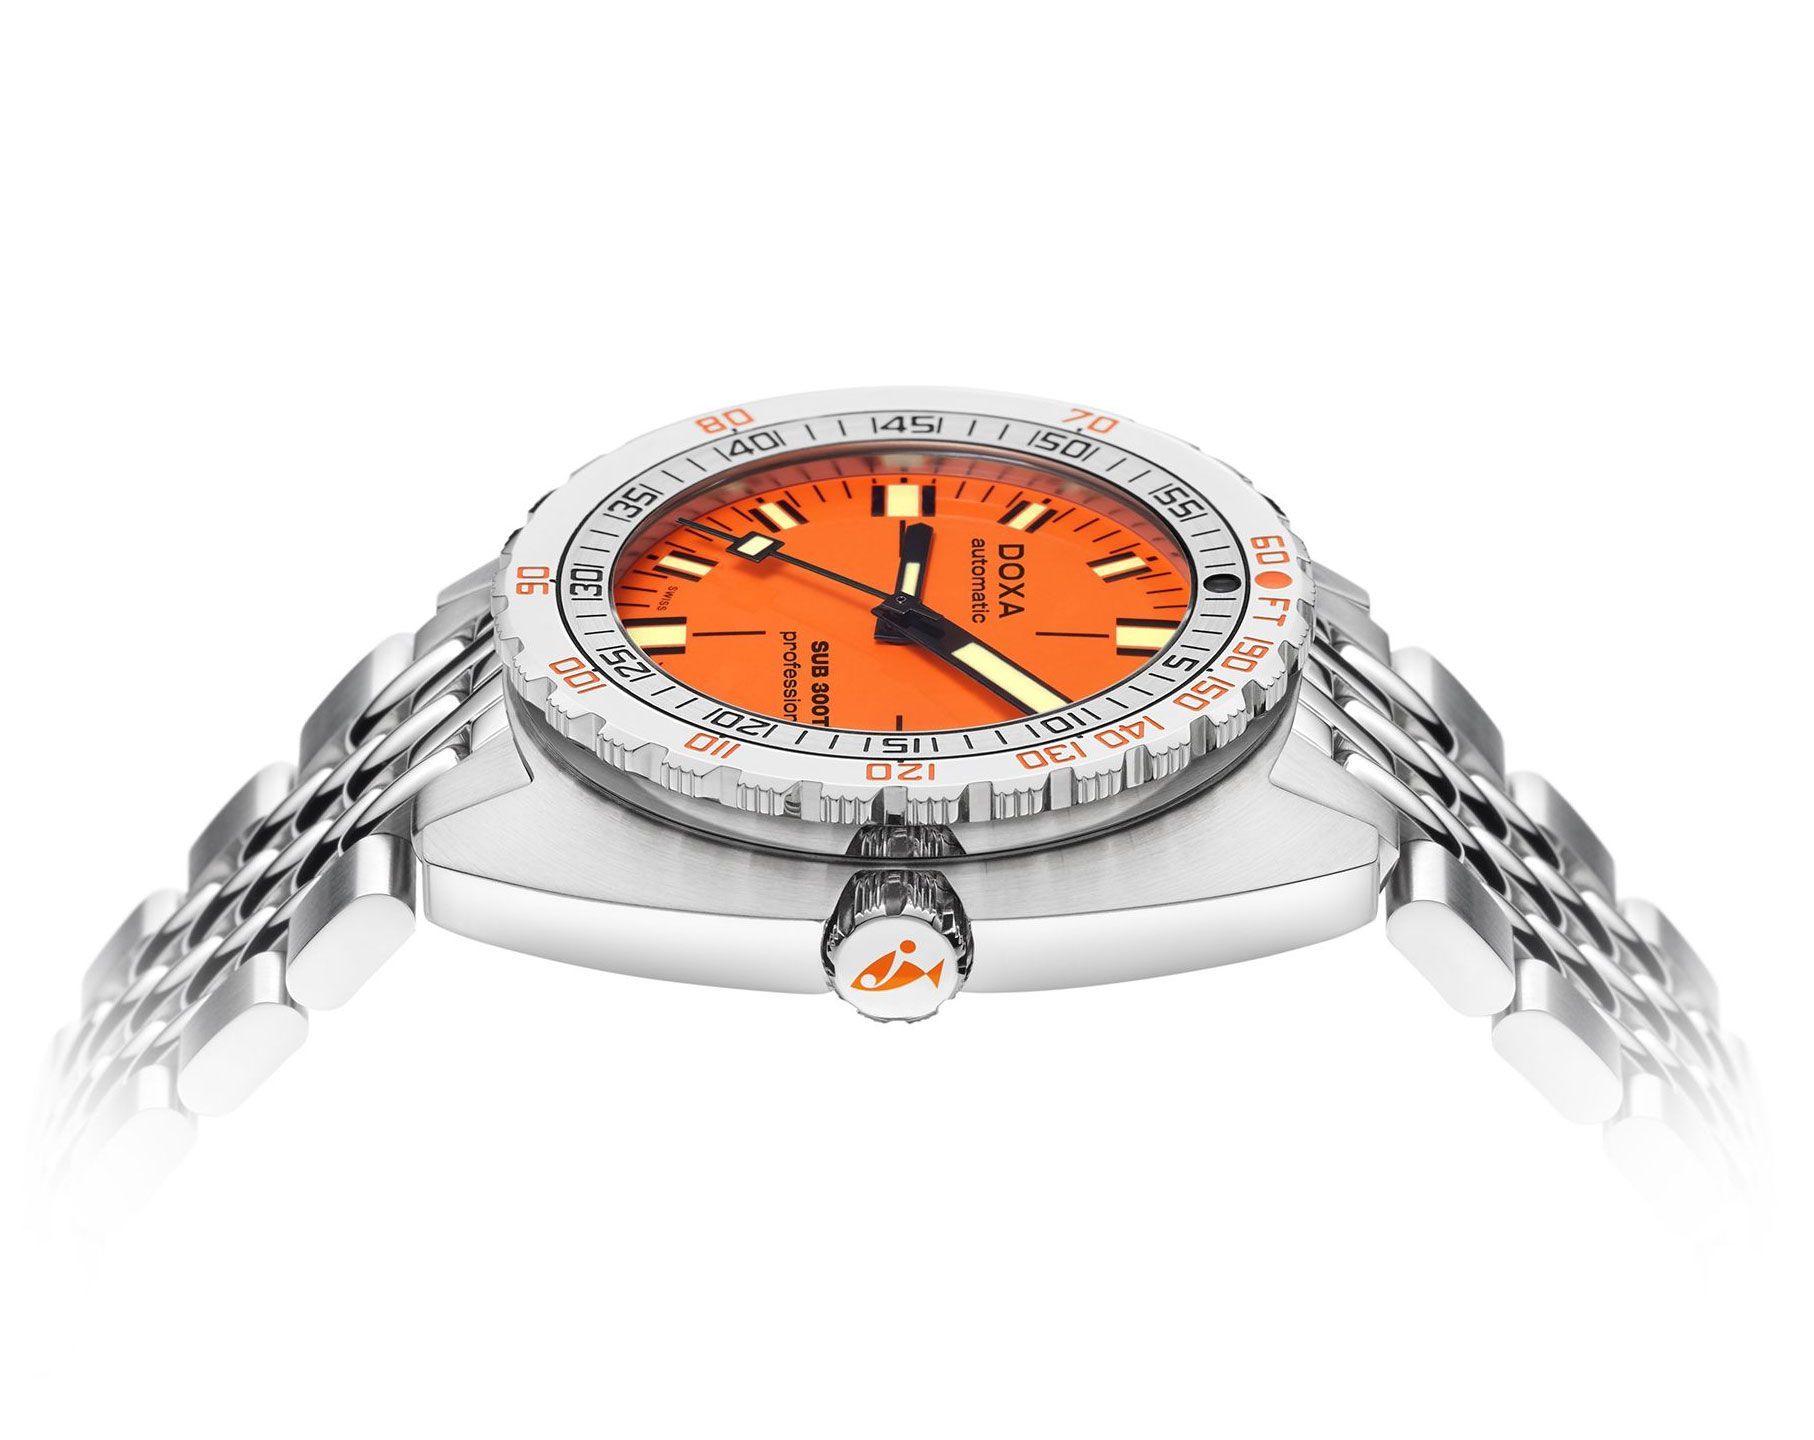 Doxa Professional 42.5 mm Watch in Orange Dial For Men - 3